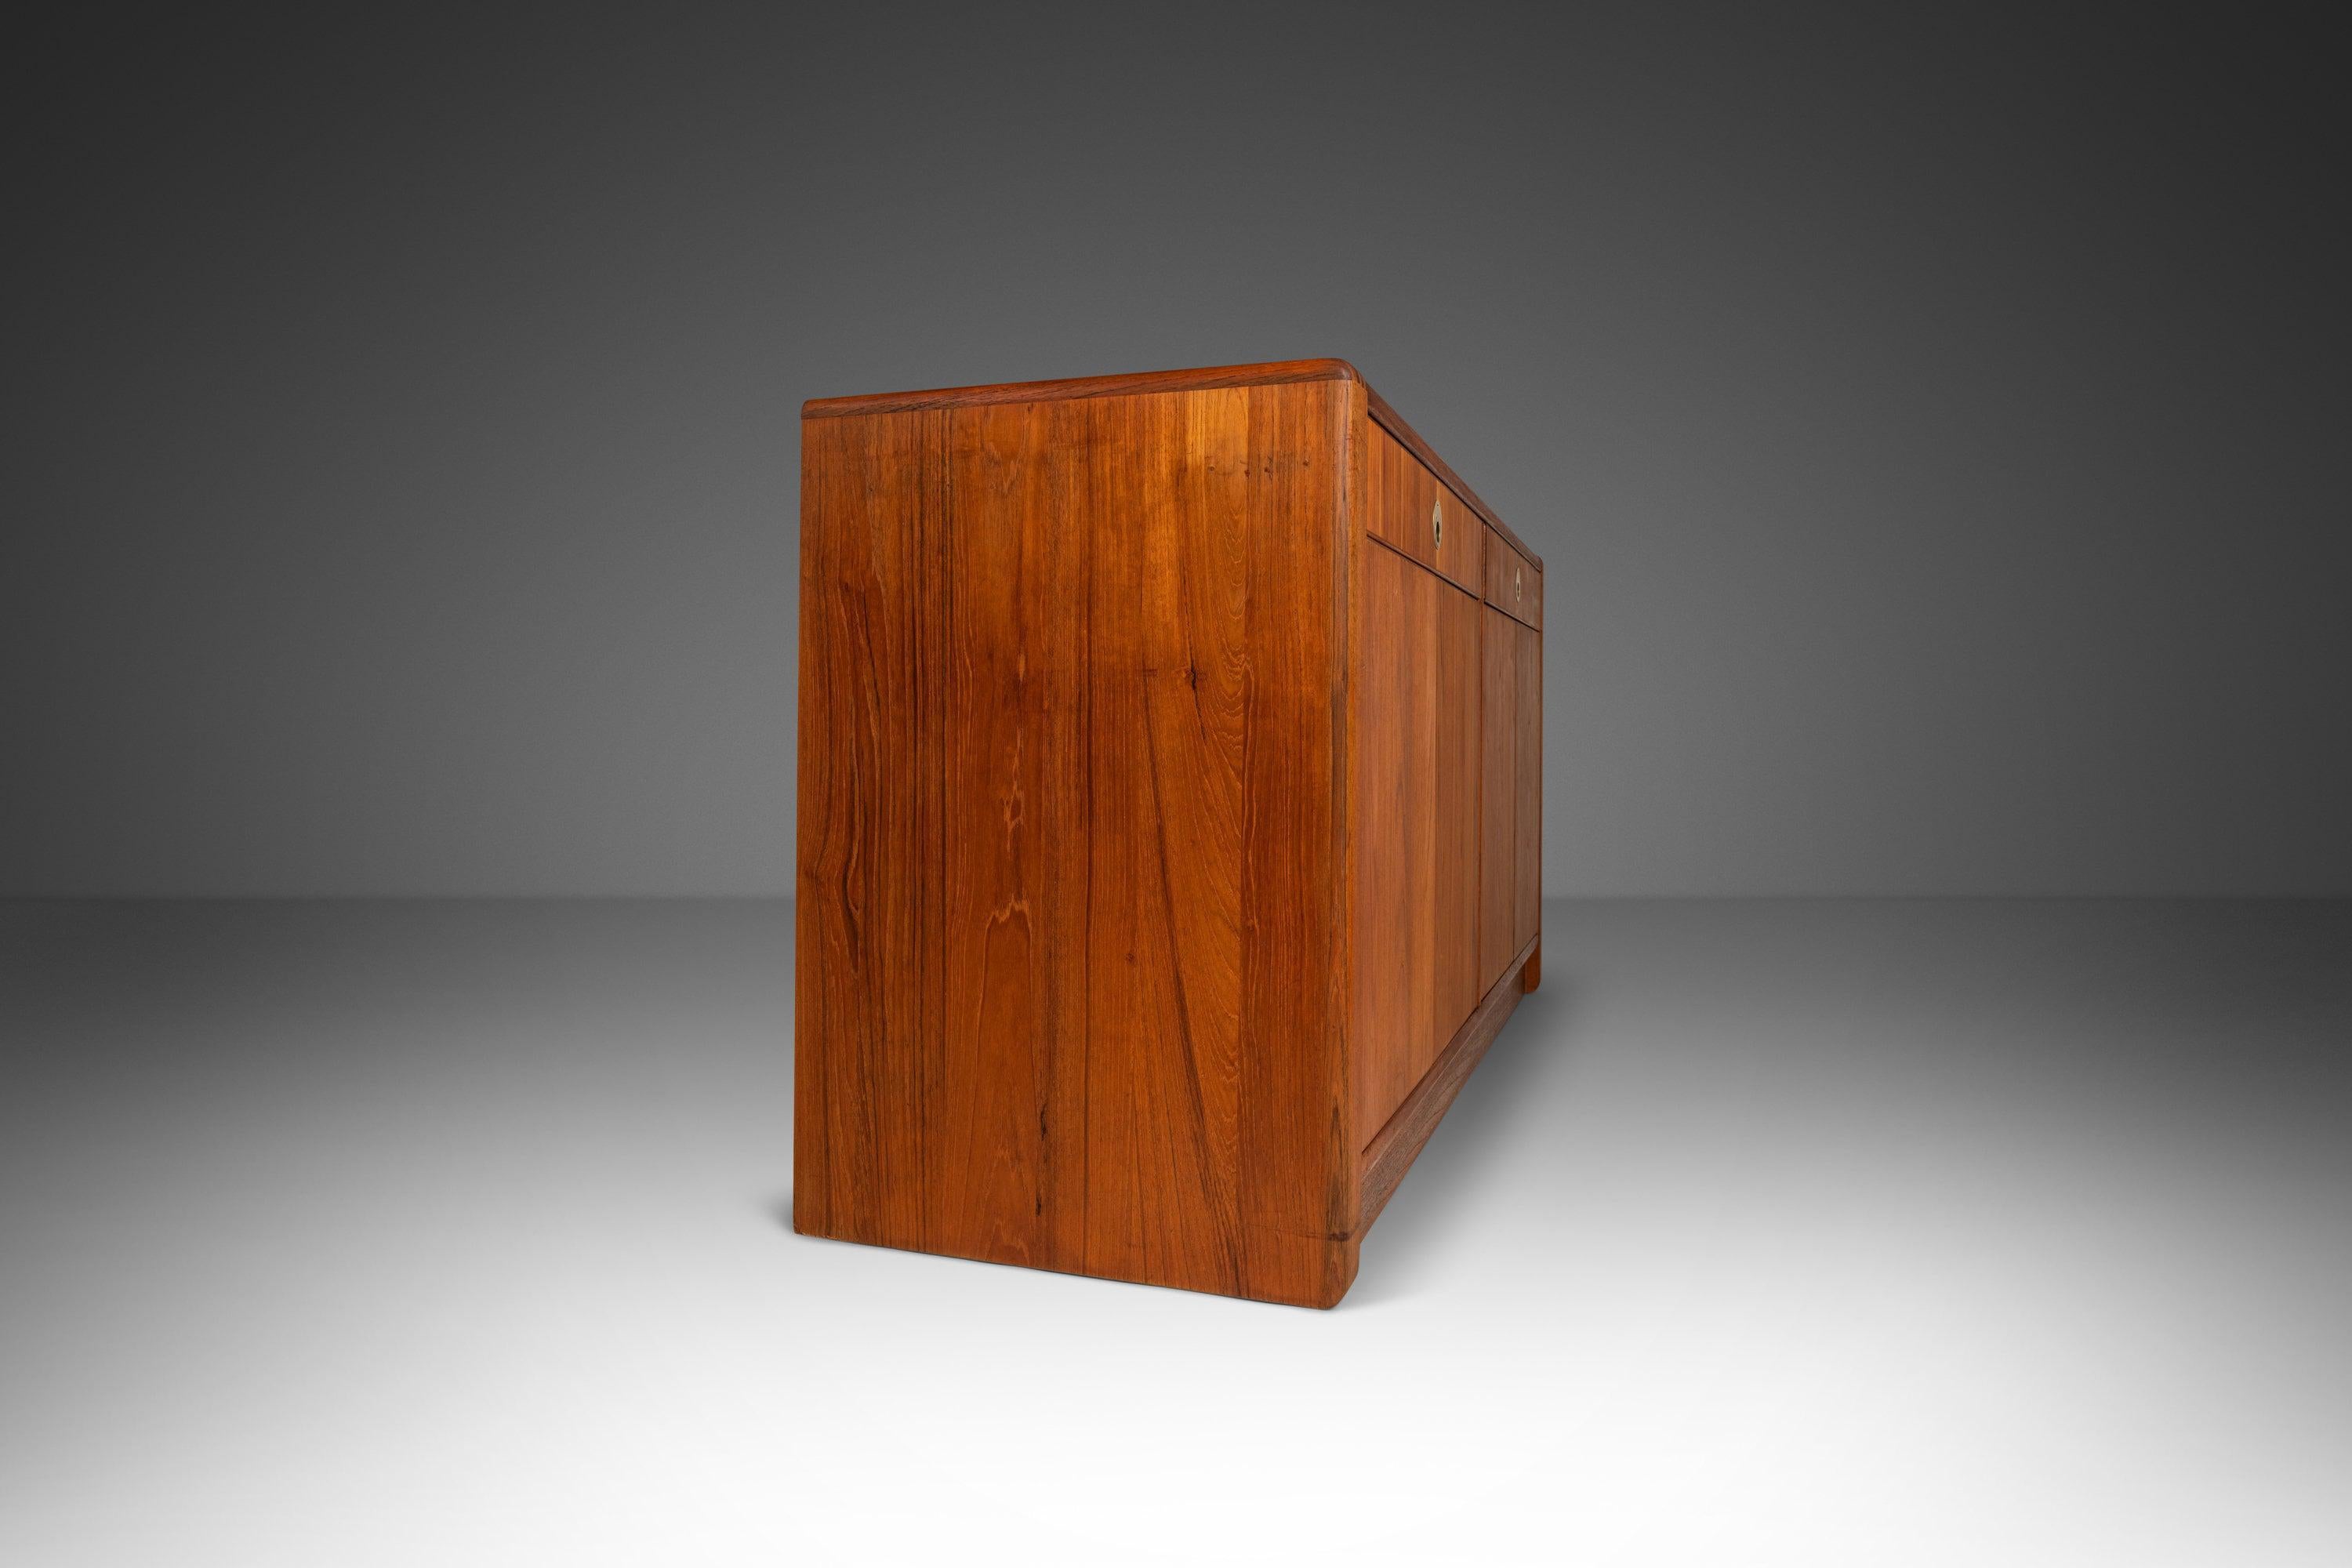 Elegant Mid-Century Modern Cabinet Sideboard Credenza in Teak by D-Scan, c. 1970 In Good Condition For Sale In Deland, FL